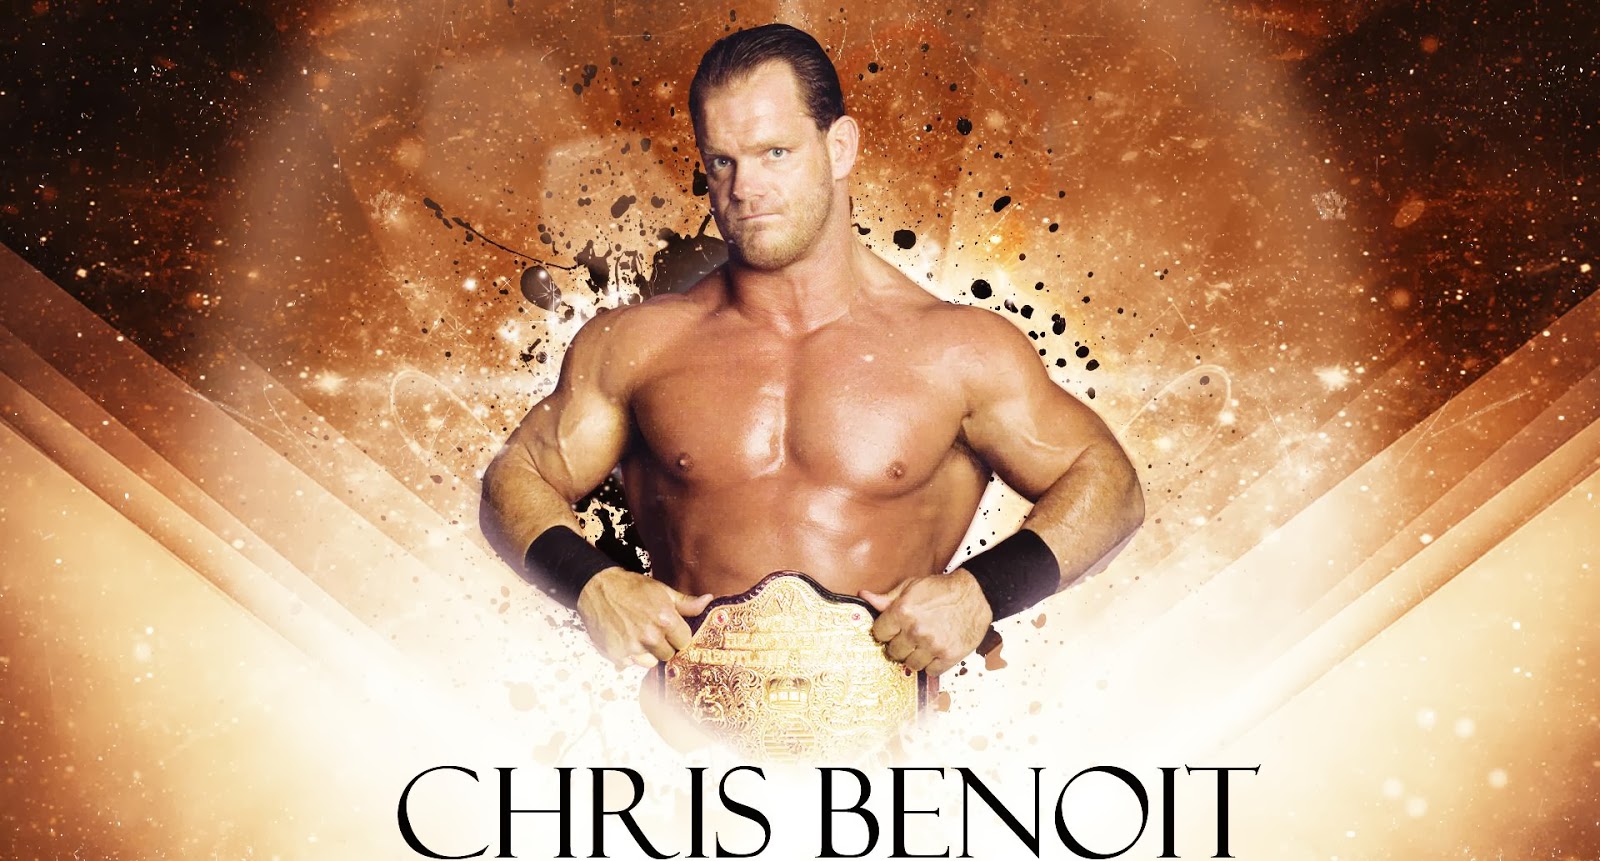  Chris Benoit Hd Wallpapers Free Download